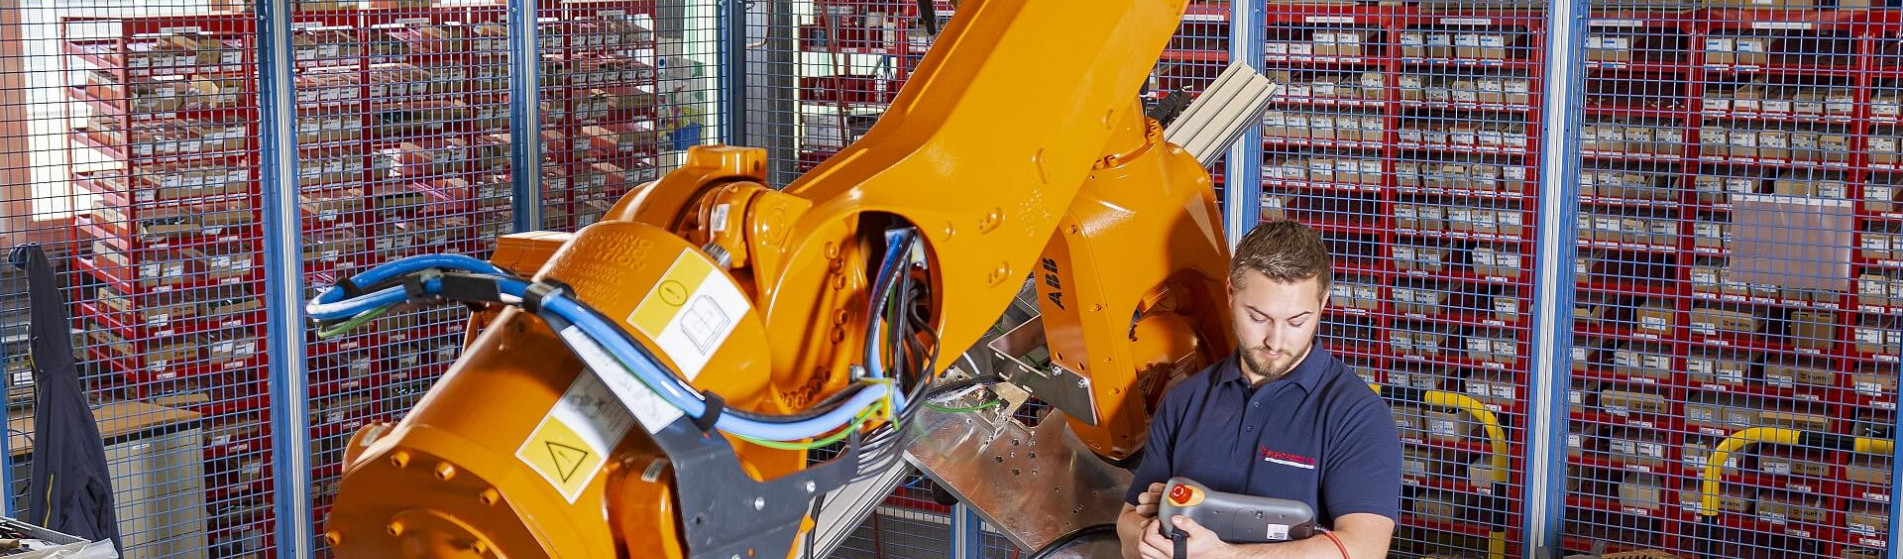 Handling robots - customized automation